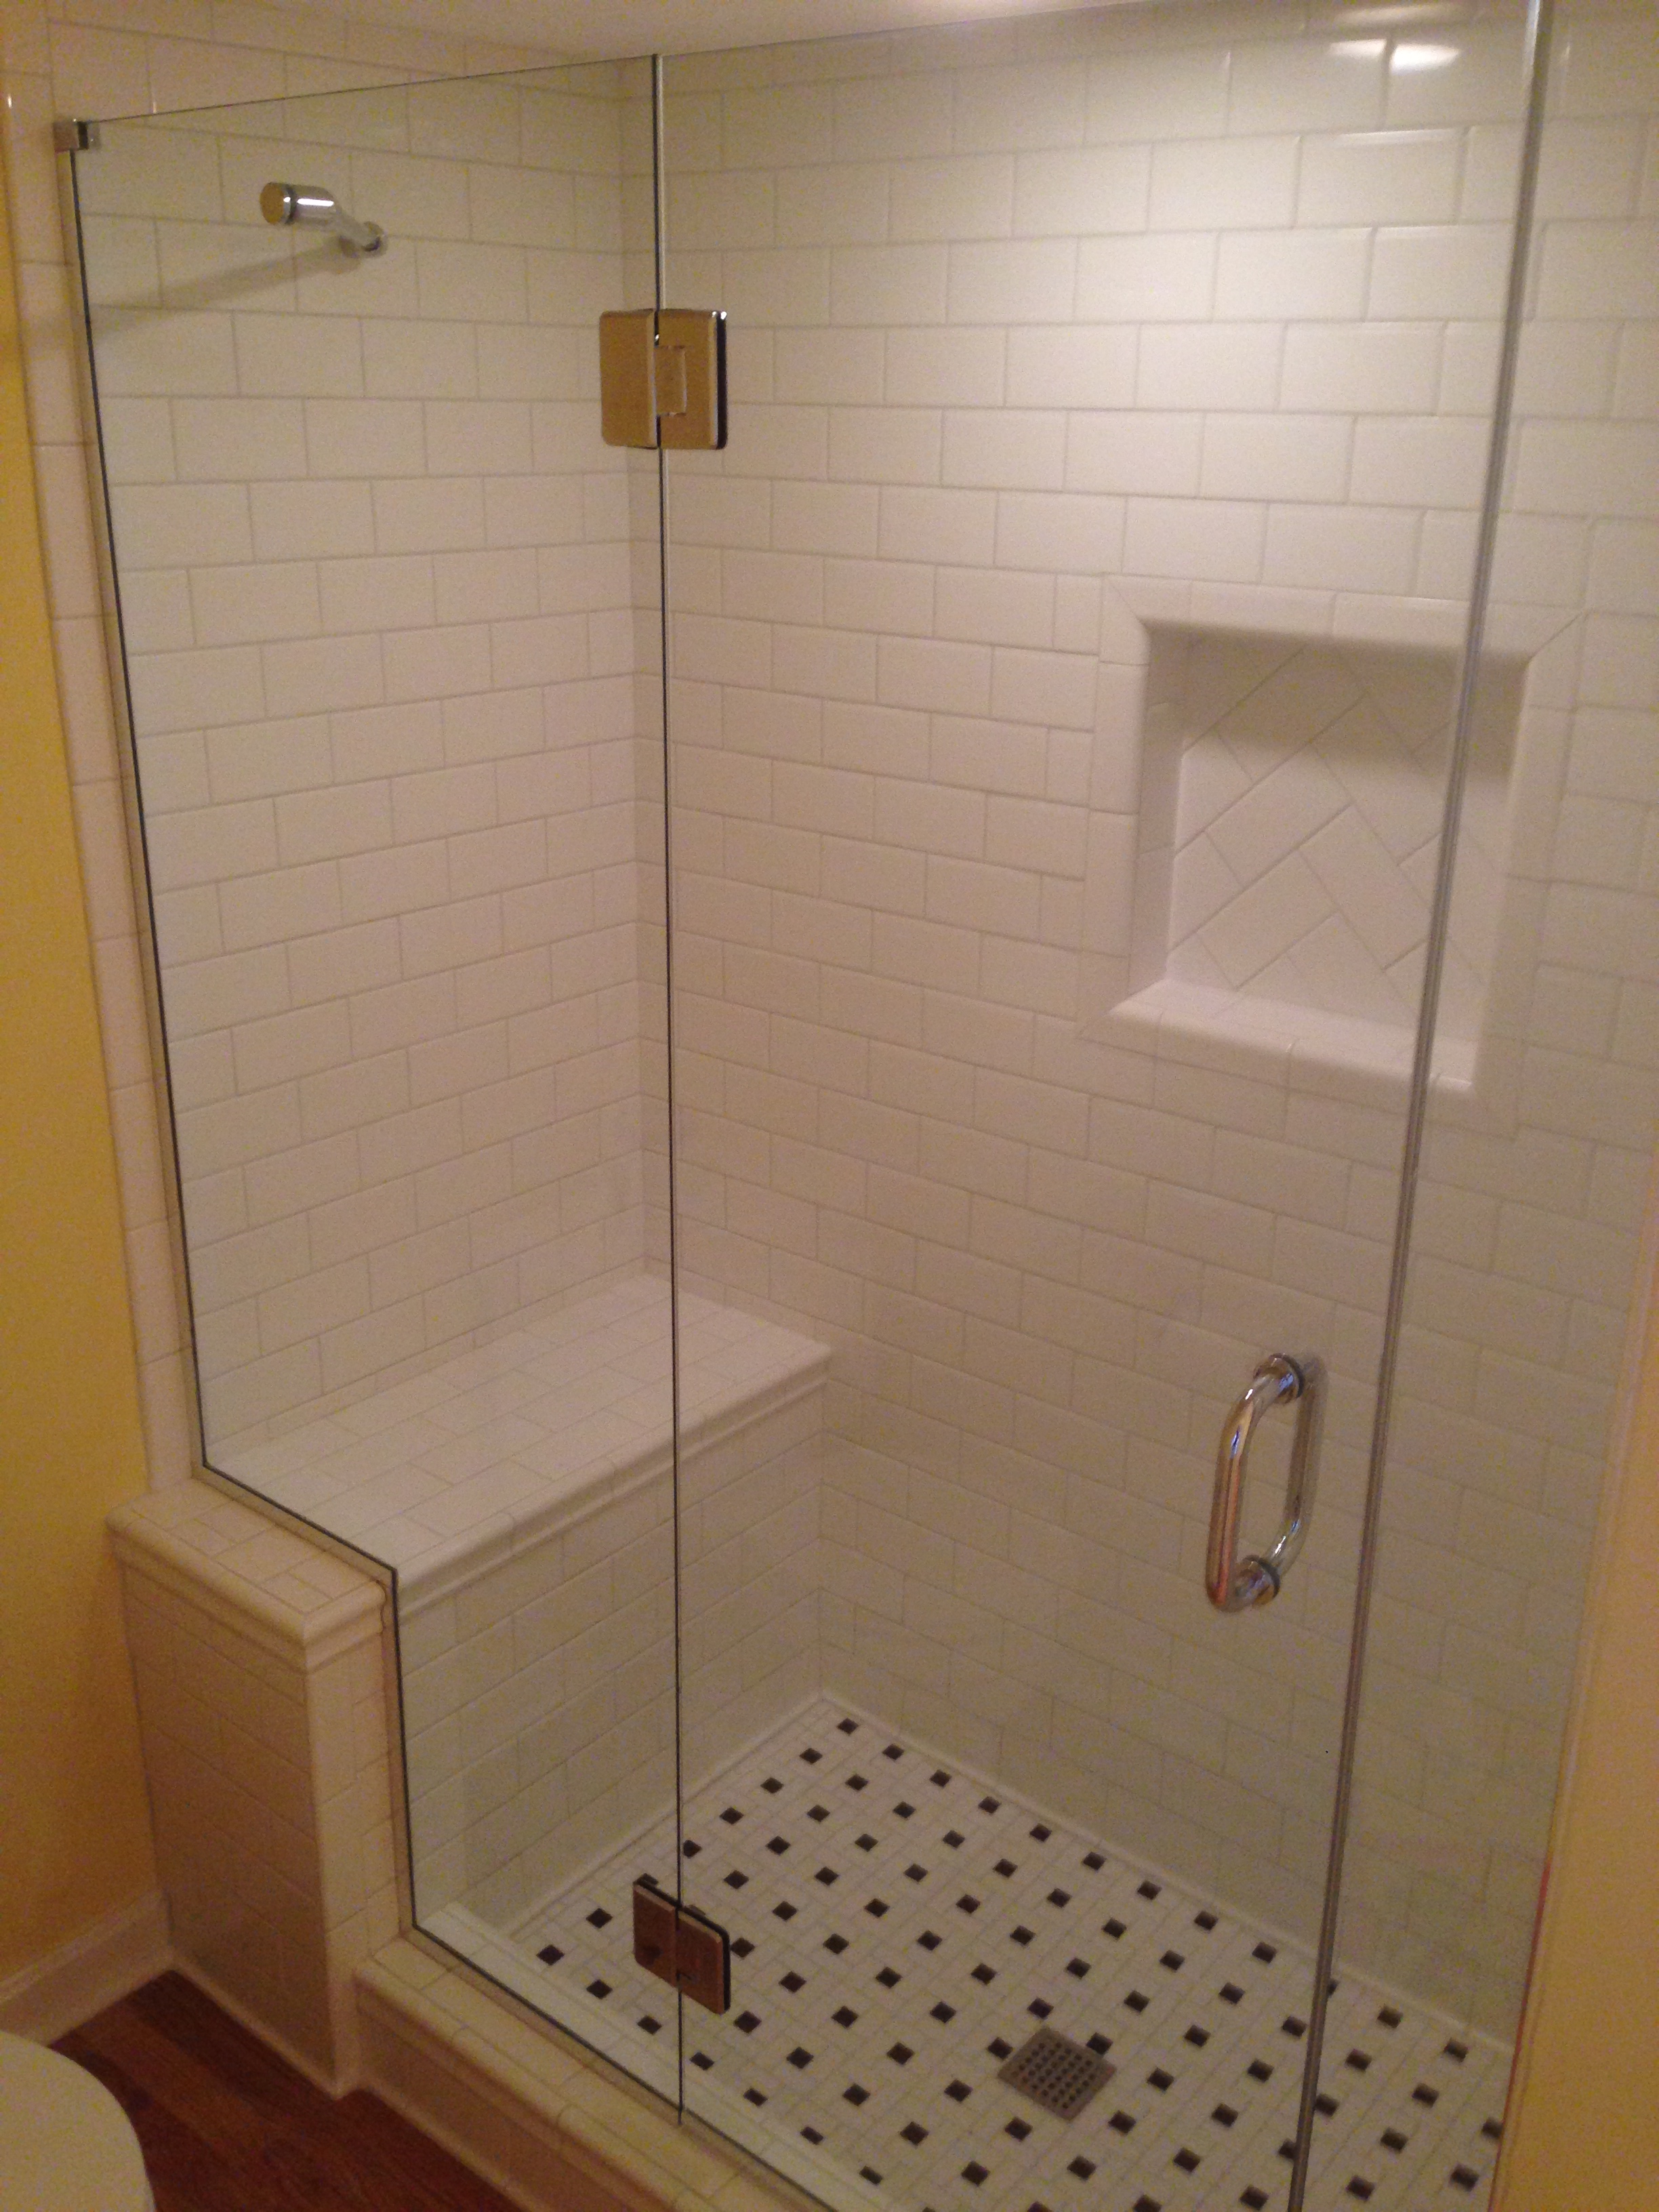 Converting Tub To Walk In Shower Bathroom Renovations